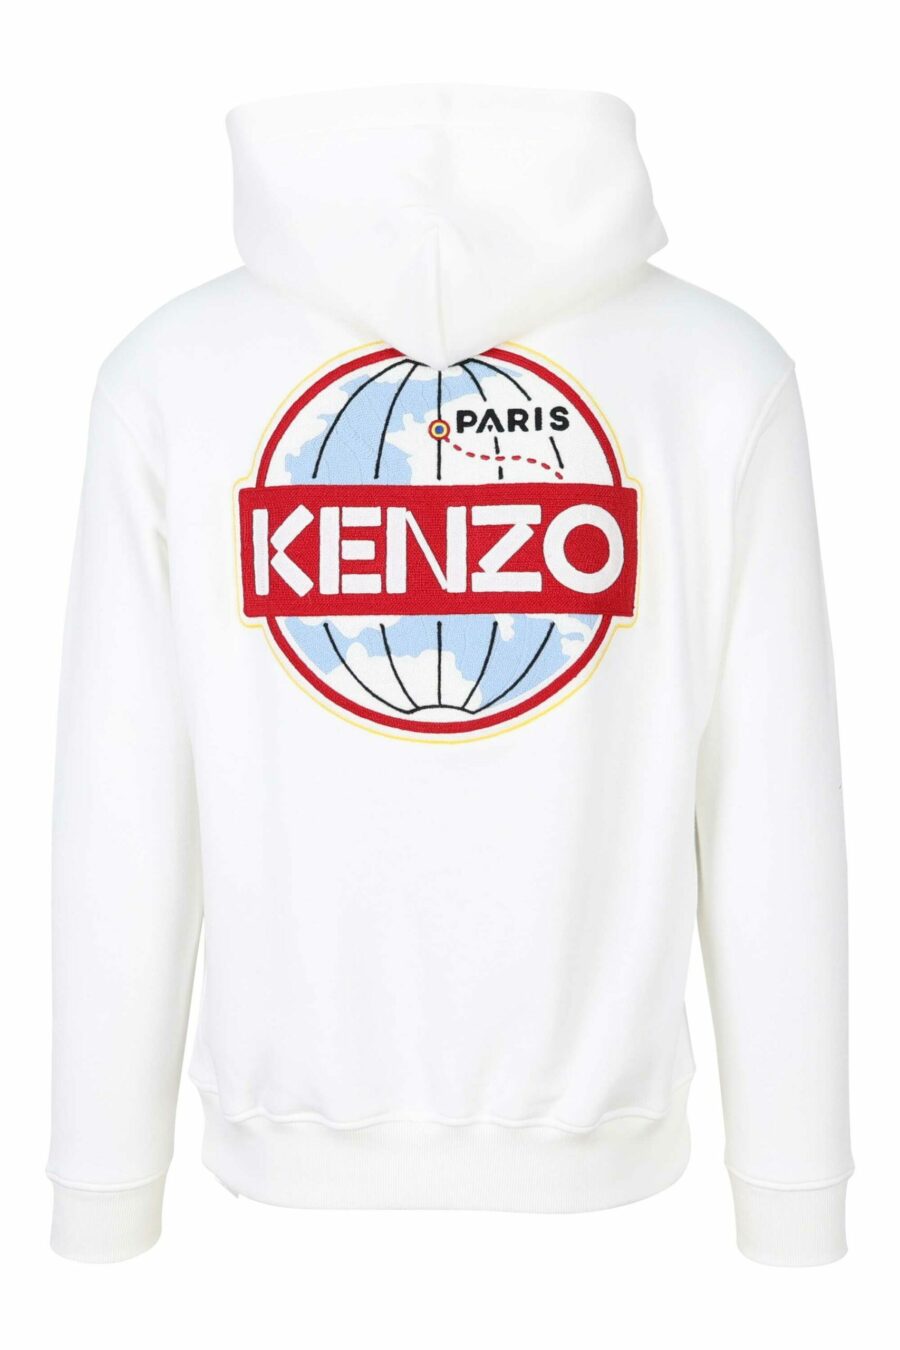 White hooded sweatshirt with mini logo "kenzo travel" - 3612230515765 2 1 scaled